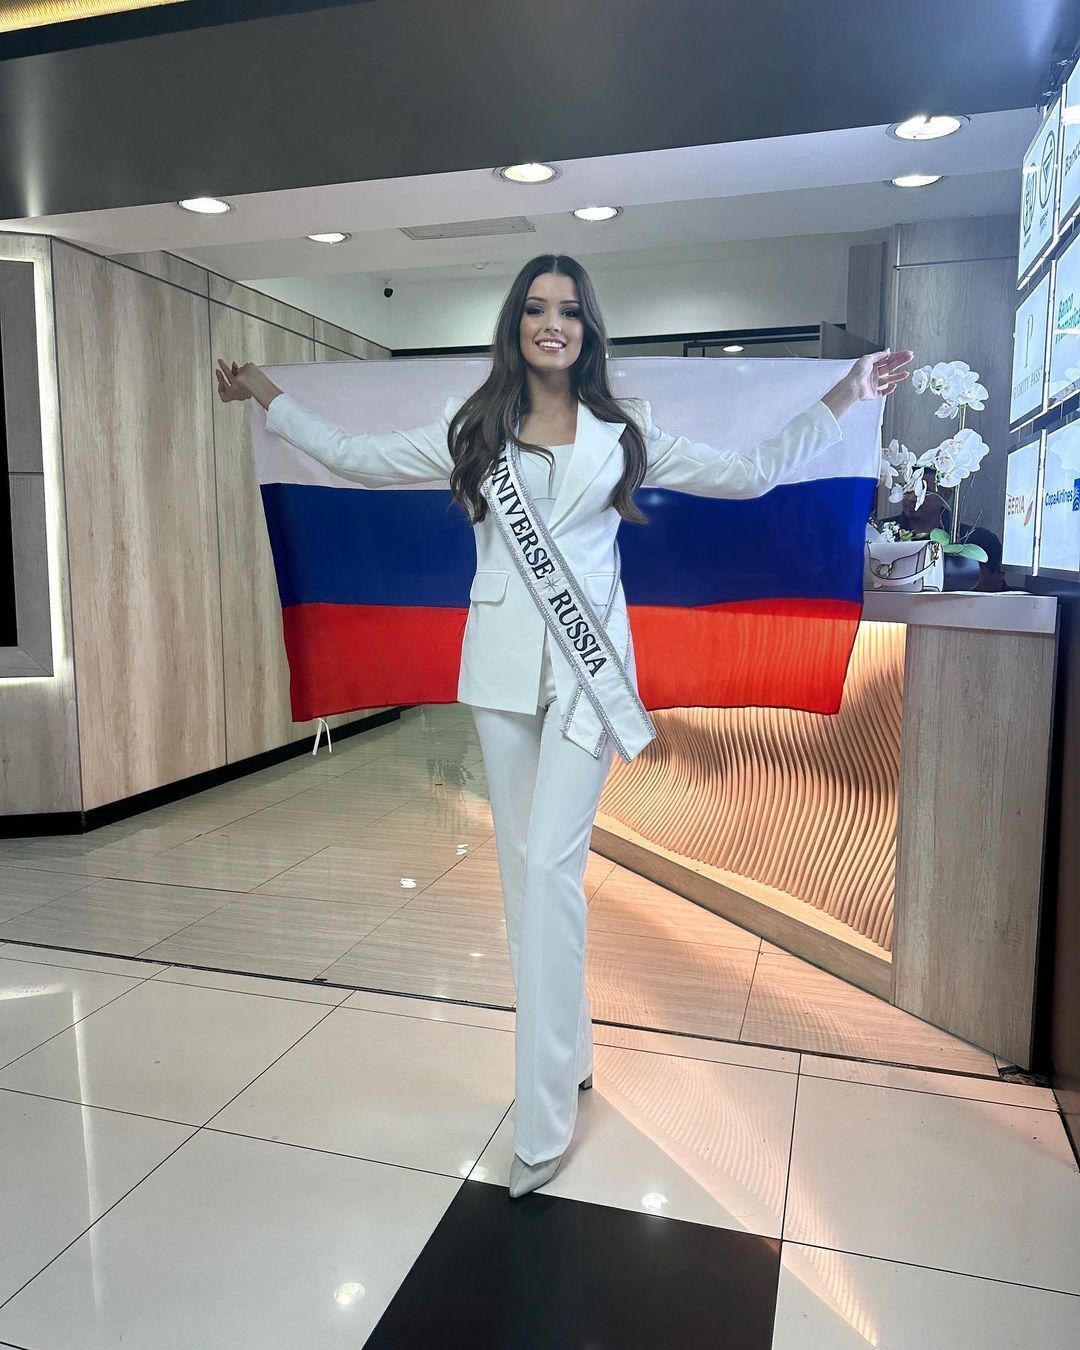 Russia's Marhariya Holubieva confirmed that she wanted to make friends with Ukraine's Angelina Usanova at Miss Universe 2023